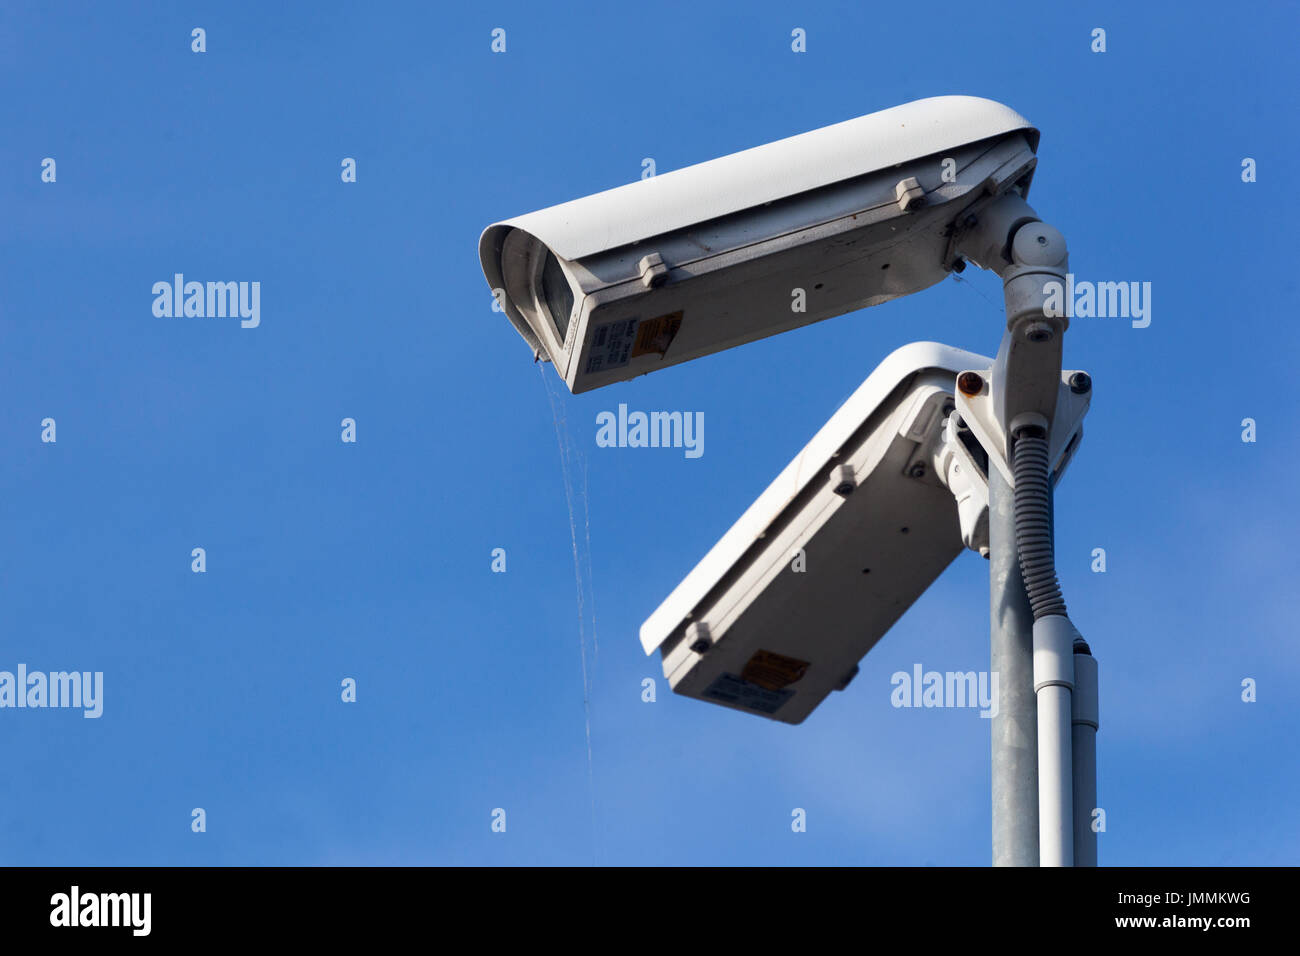 Surveillance cameras CCTV recognition technology, CCTV Public security camera Stock Photo